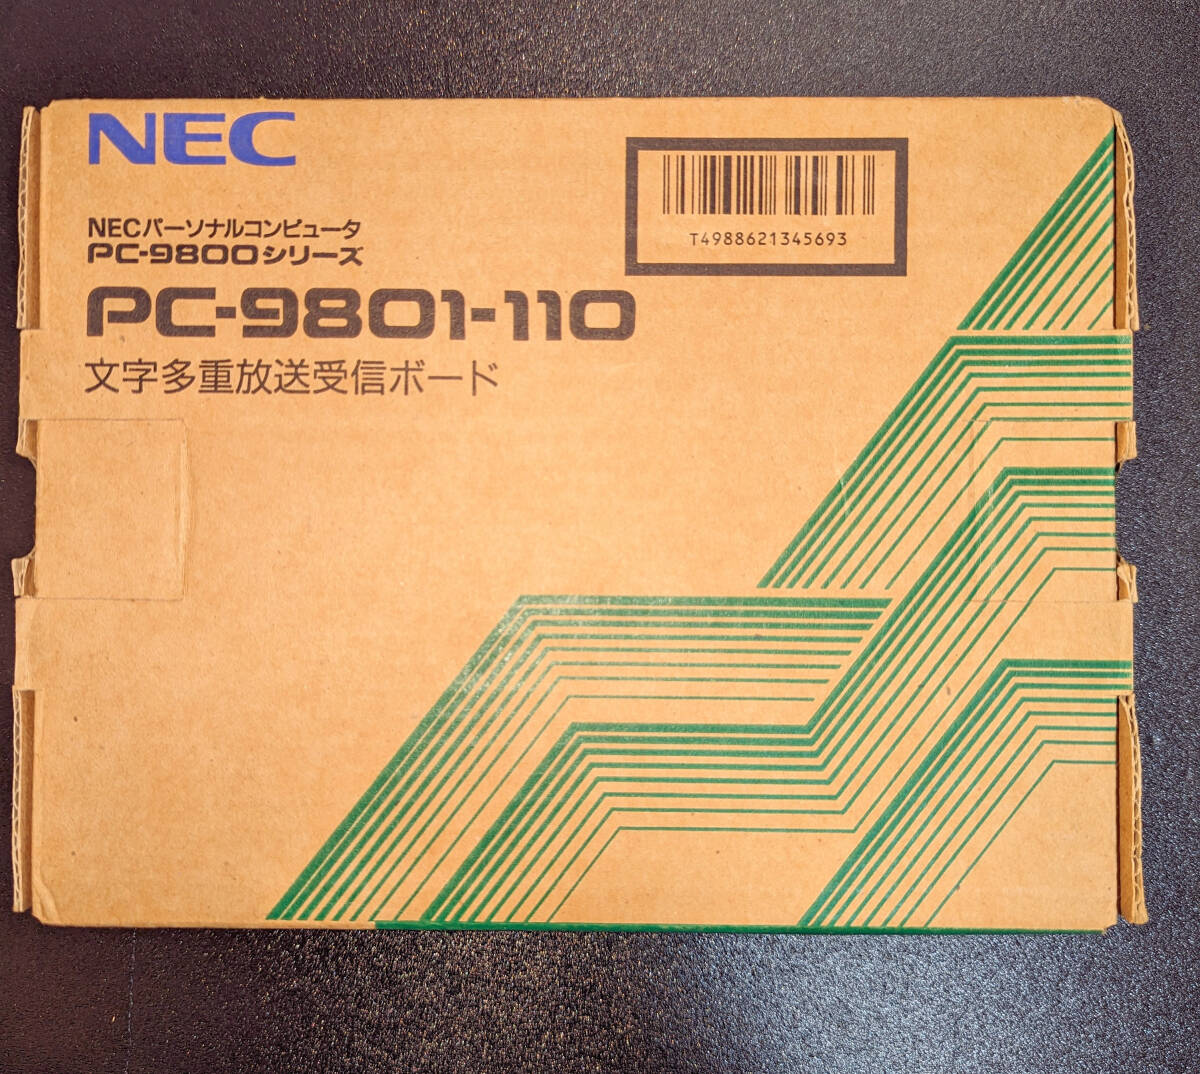 NEC PC-9800シリーズ PC-9801-110 文字多重放送受信ボード_画像1